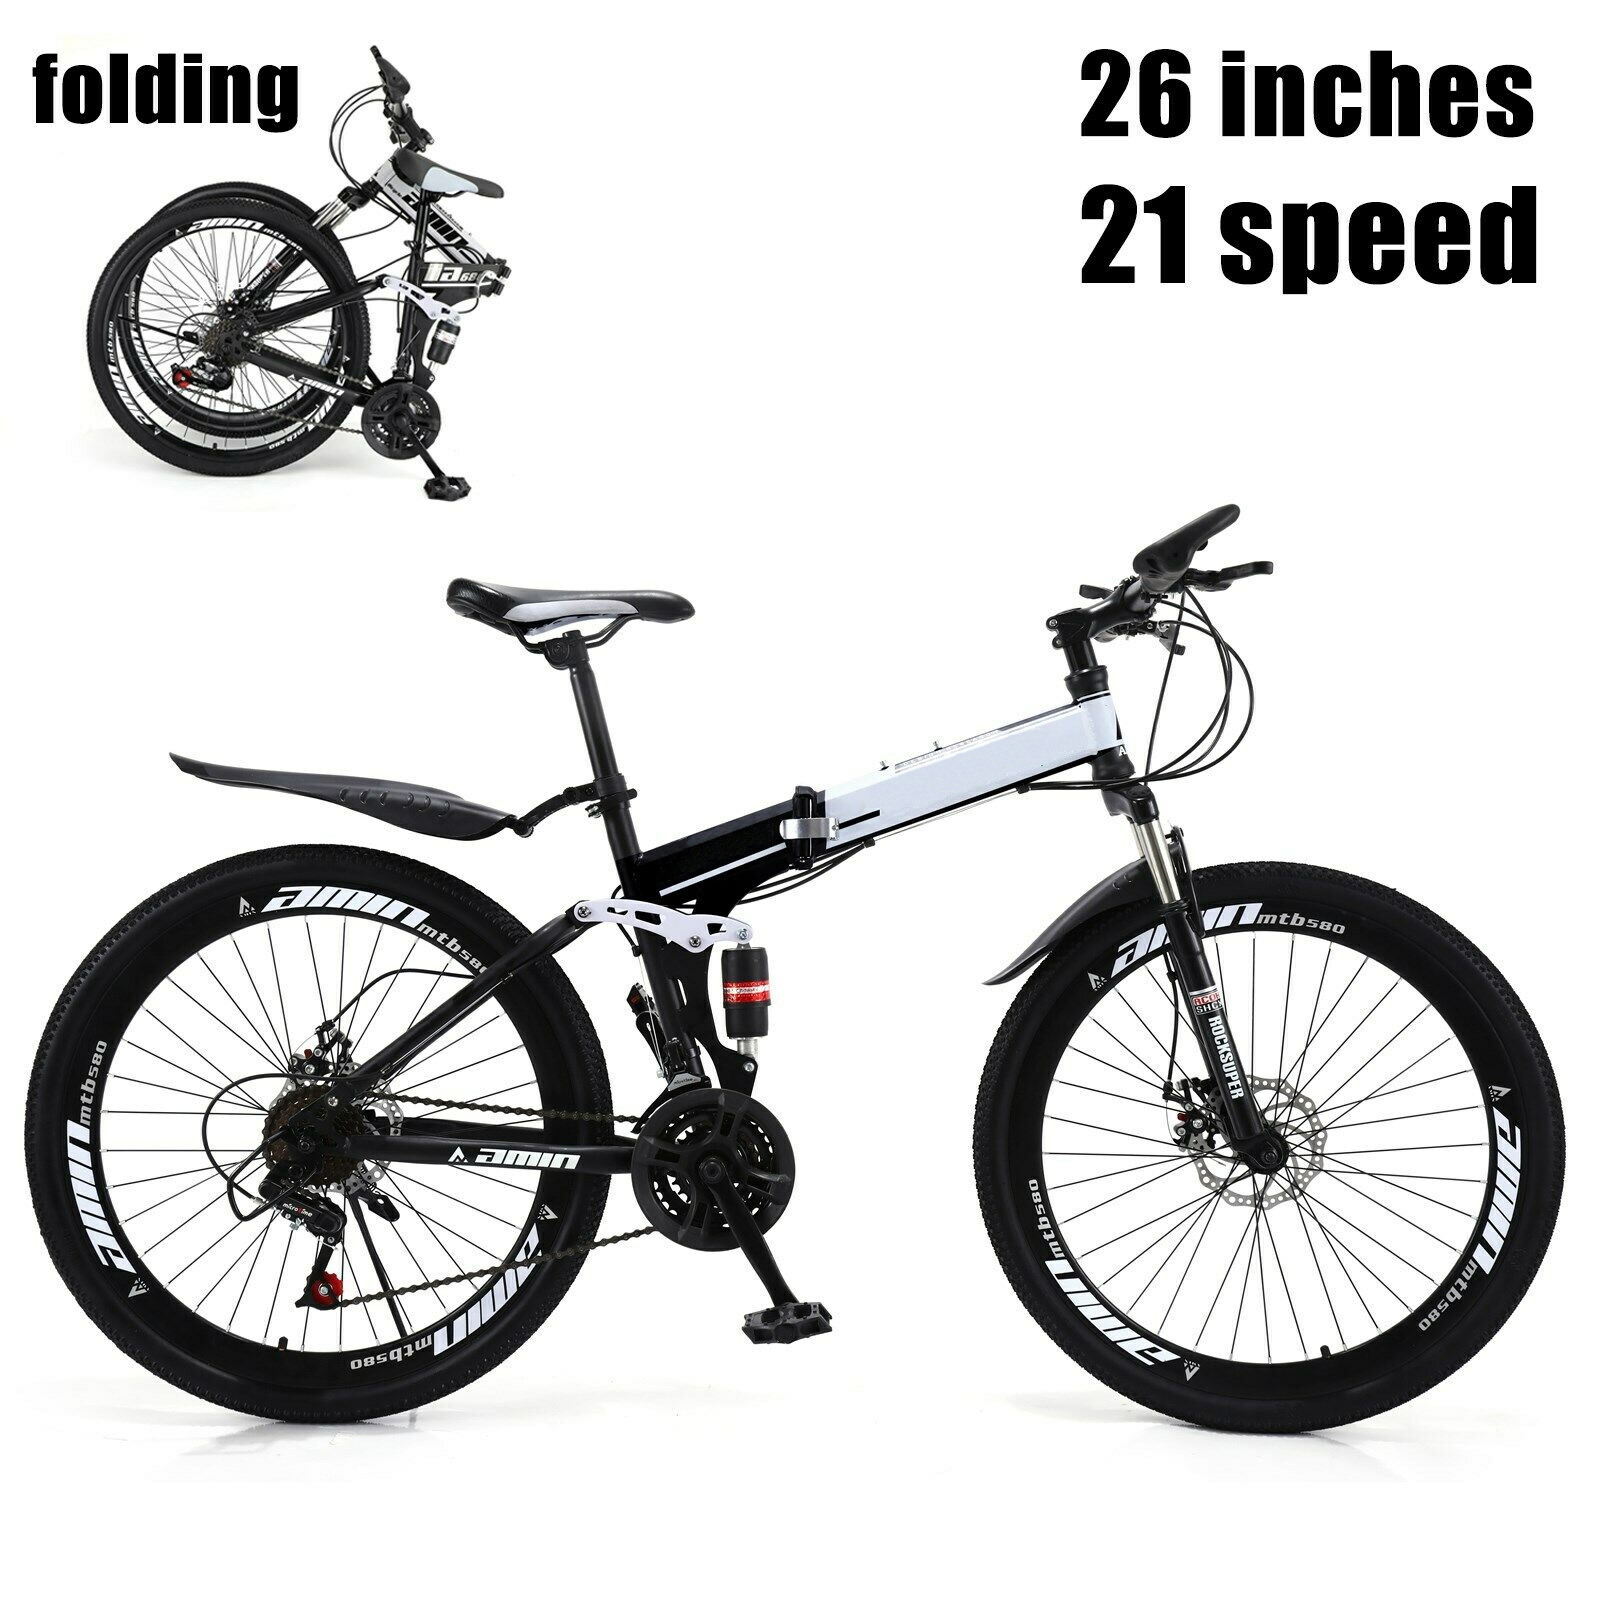 3 Spoke Wheel Foldable Mountain Bicycles in Easy Installation,26 Inches OBSOO Mountain Bike,Folding Bikes 21 Speed Full Suspension Dual Disc Brakes 